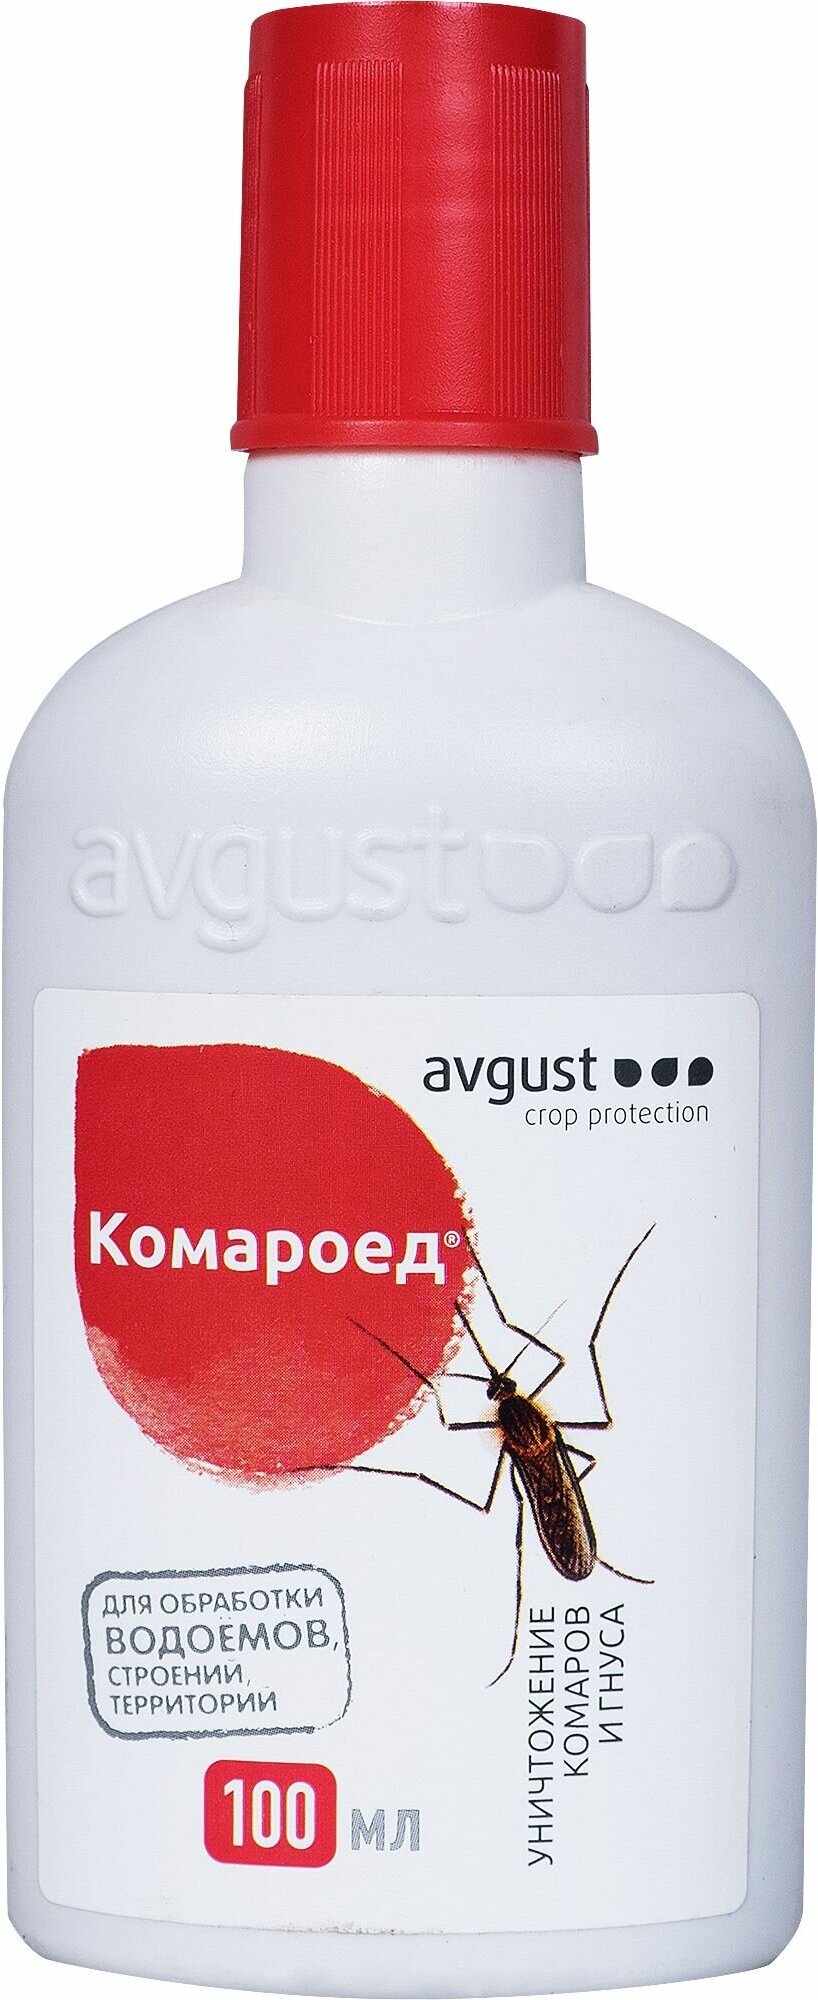 Комароед, КЭ 100 мл Avgust для уничтожения комаров и гнуса